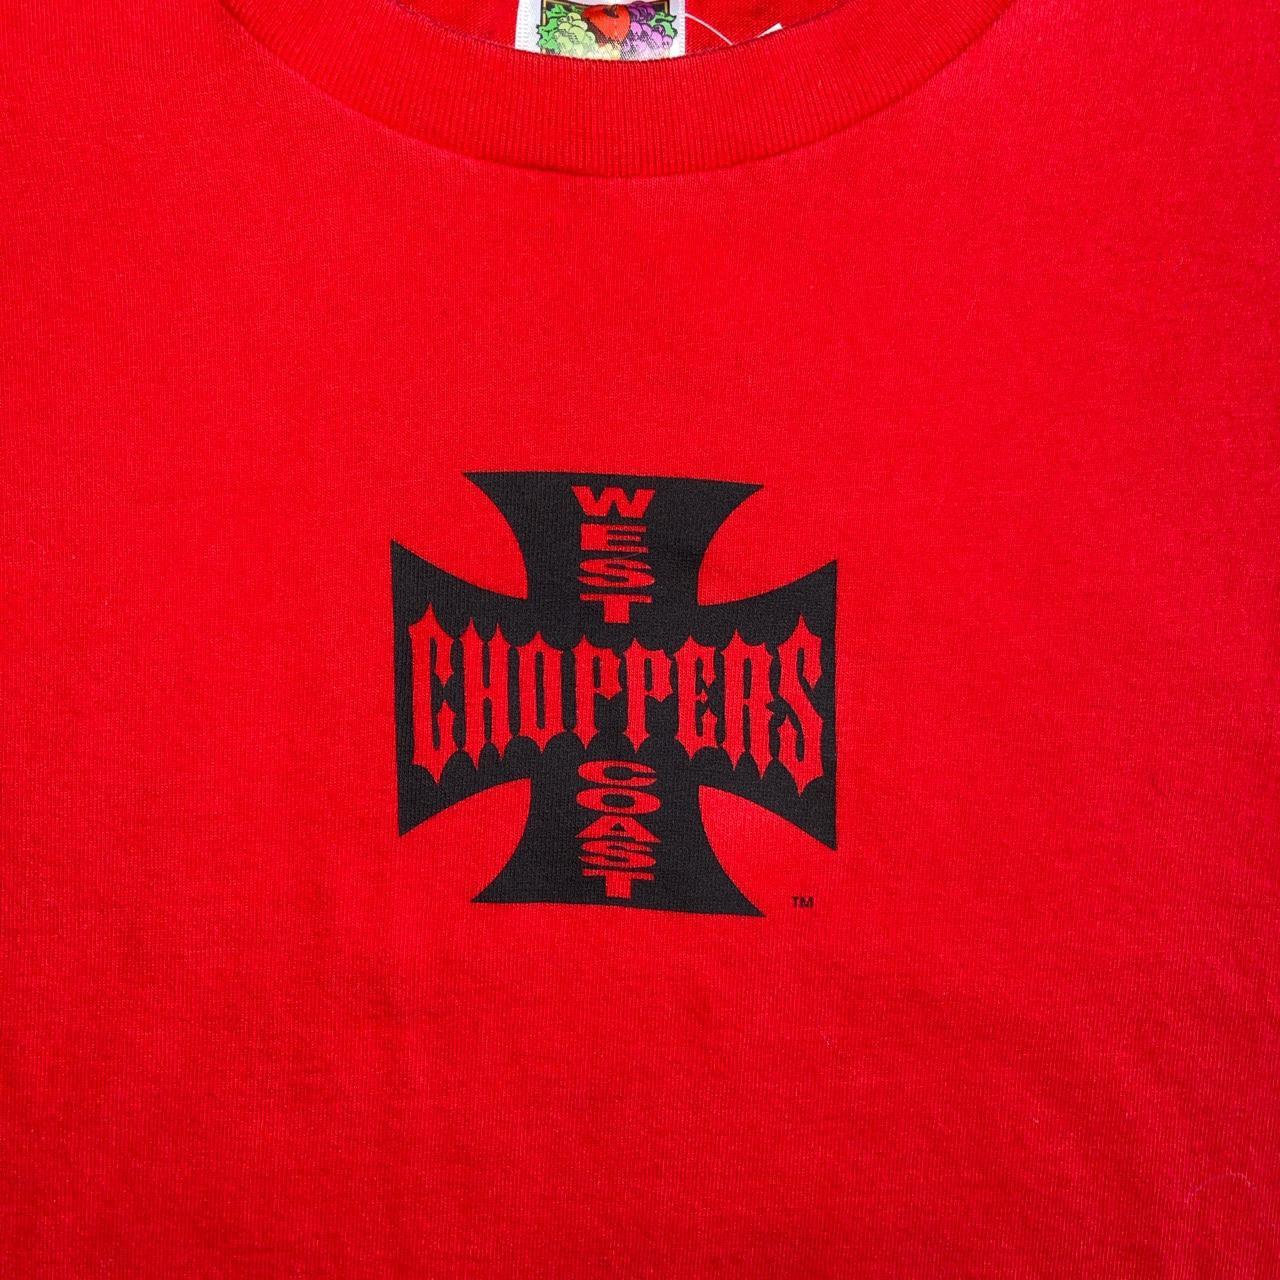 West Coast Choppers Original Cross T-Shirt In Black/Red Logo **BRAND NEW**